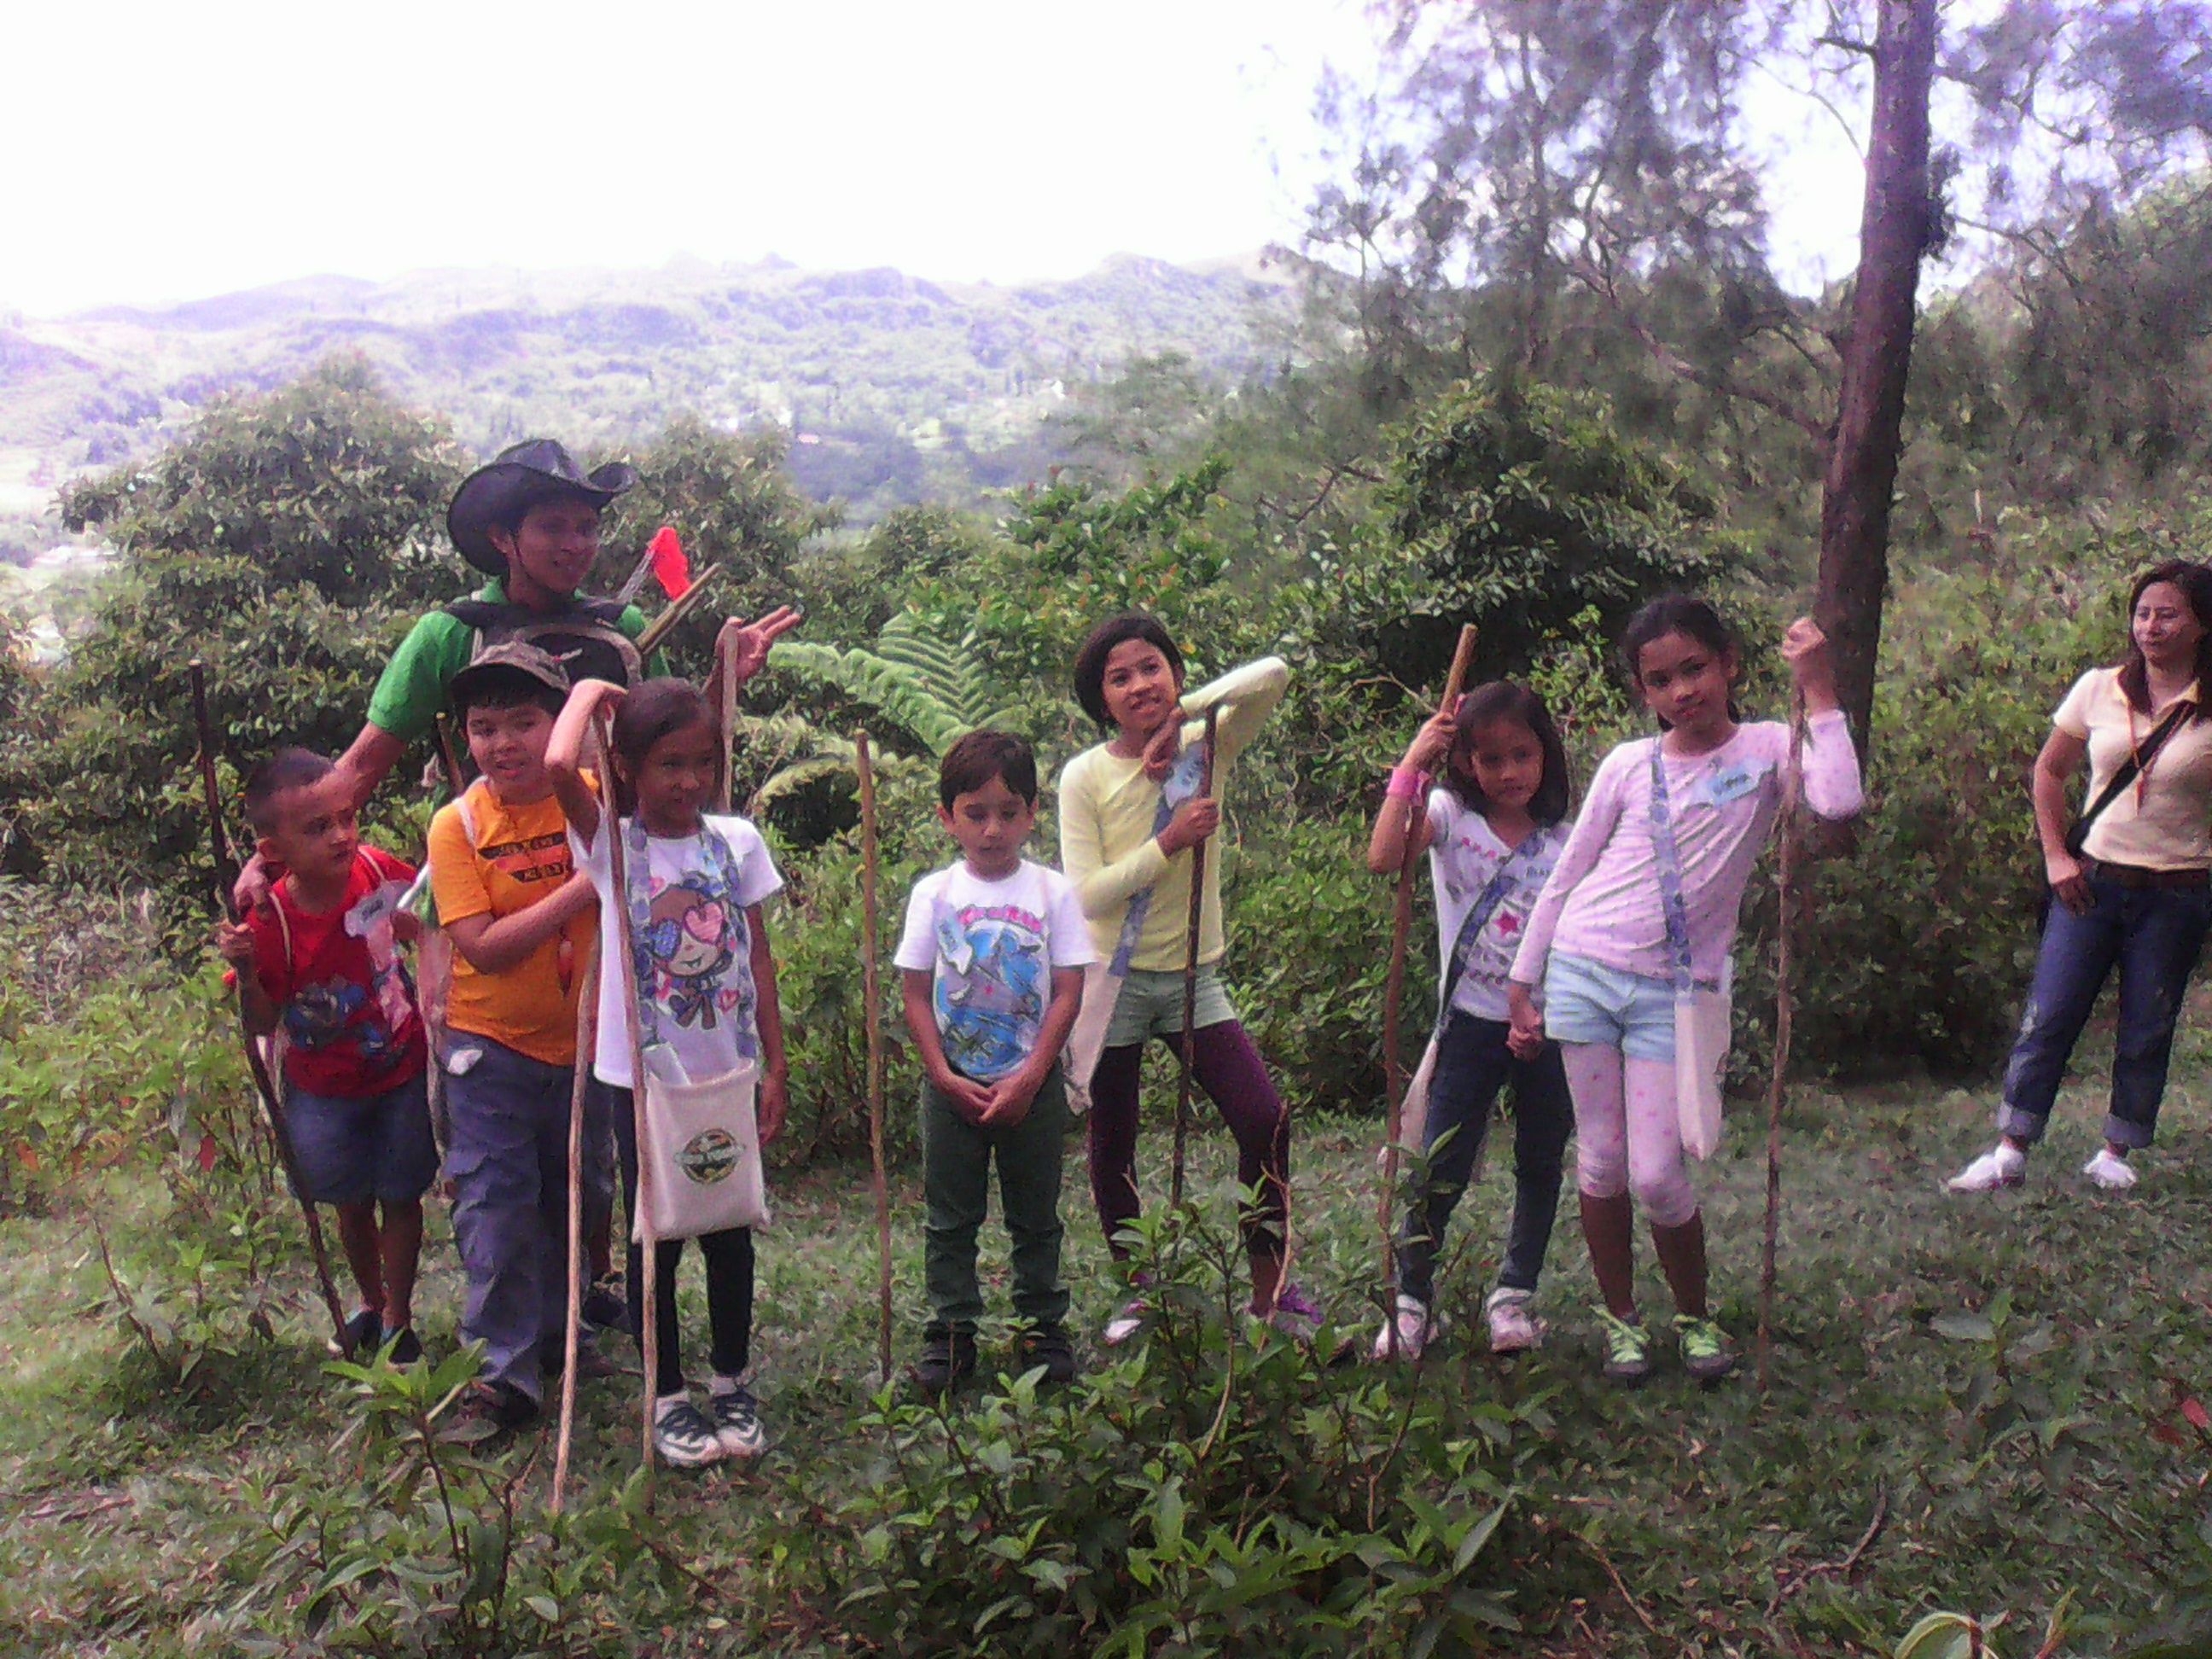 Children reach the Osmeña Peak in barangay Mantalongon, Dalaguete after a long trek.(Contributed)